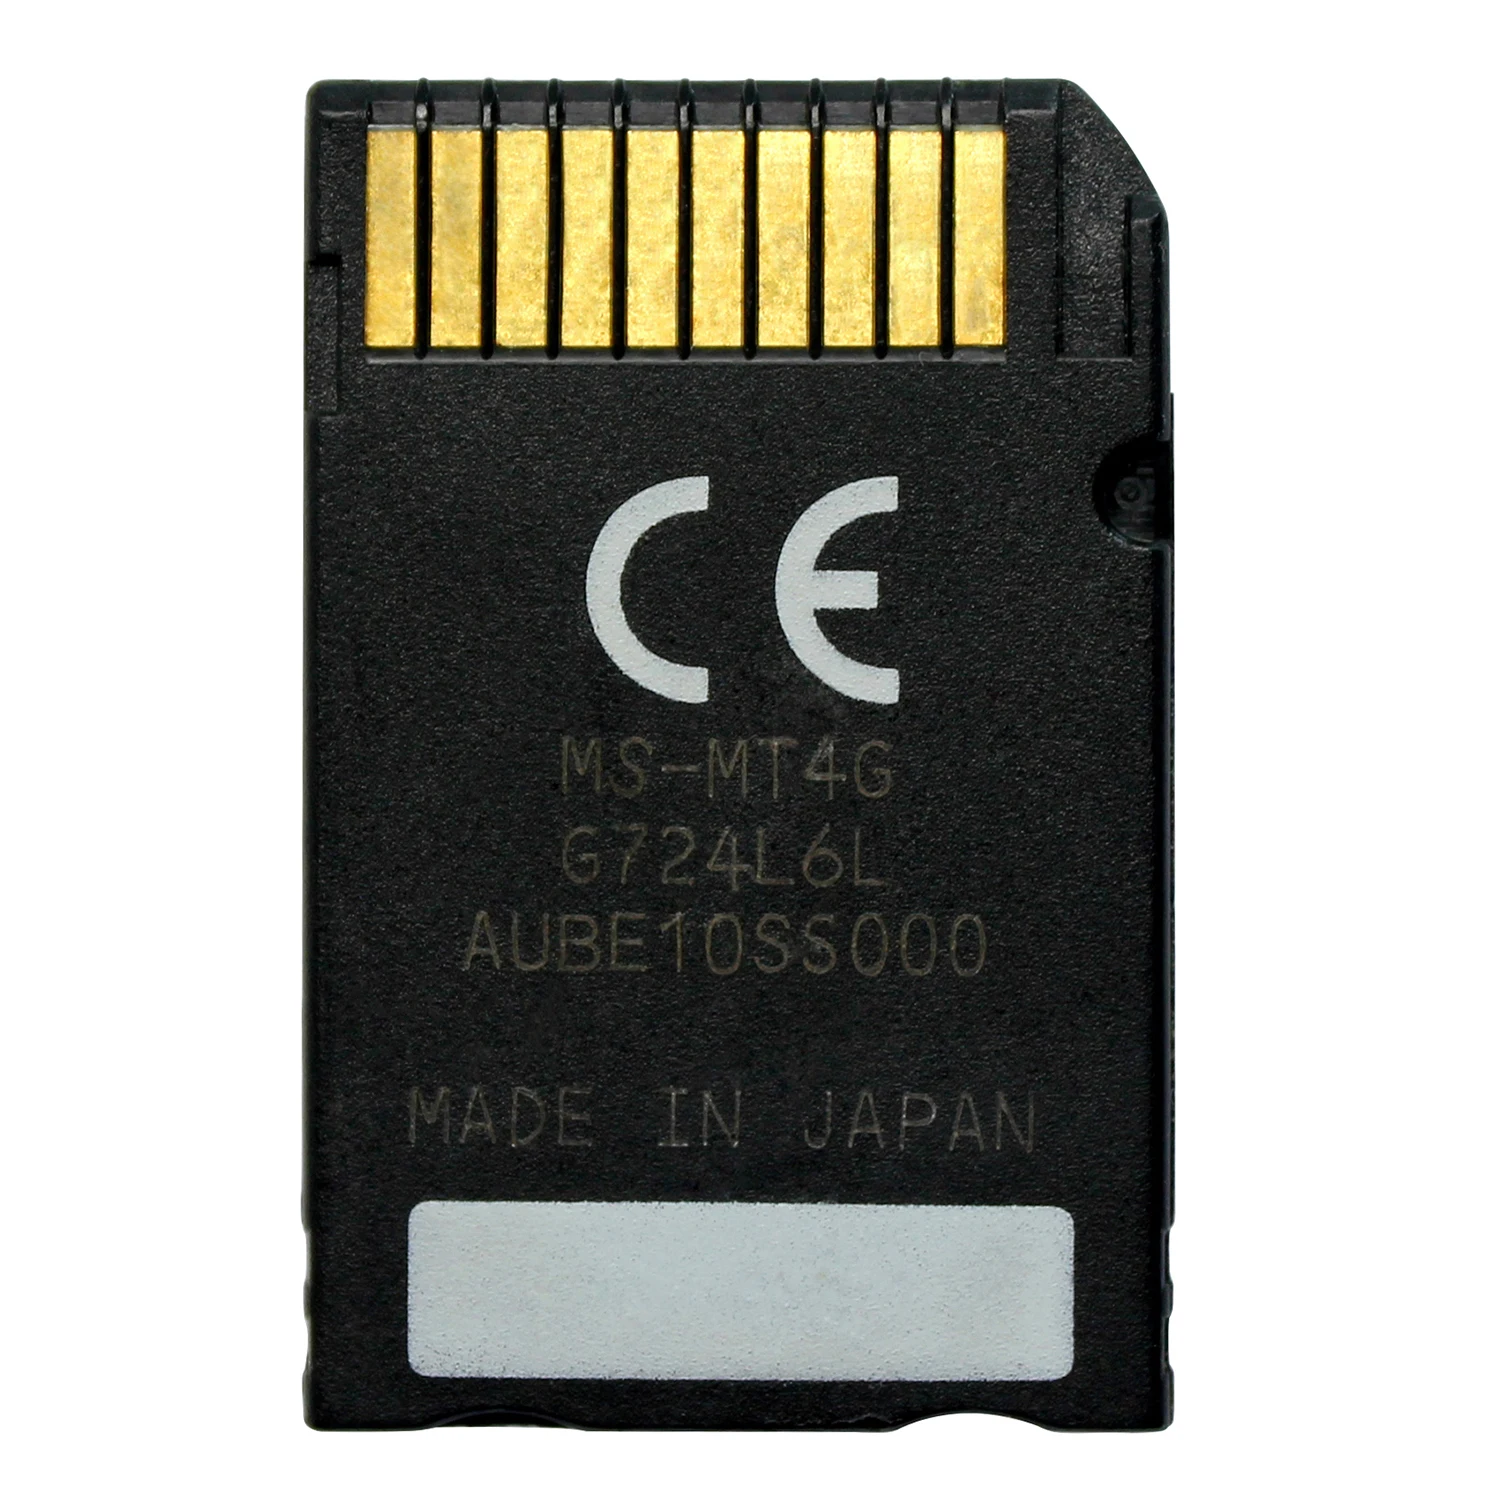 OSTENT 4GB MS Memory Stick Pro Duo Kartico za Shranjevanje za Sony PSP 1000/2000/3000 igralne Konzole